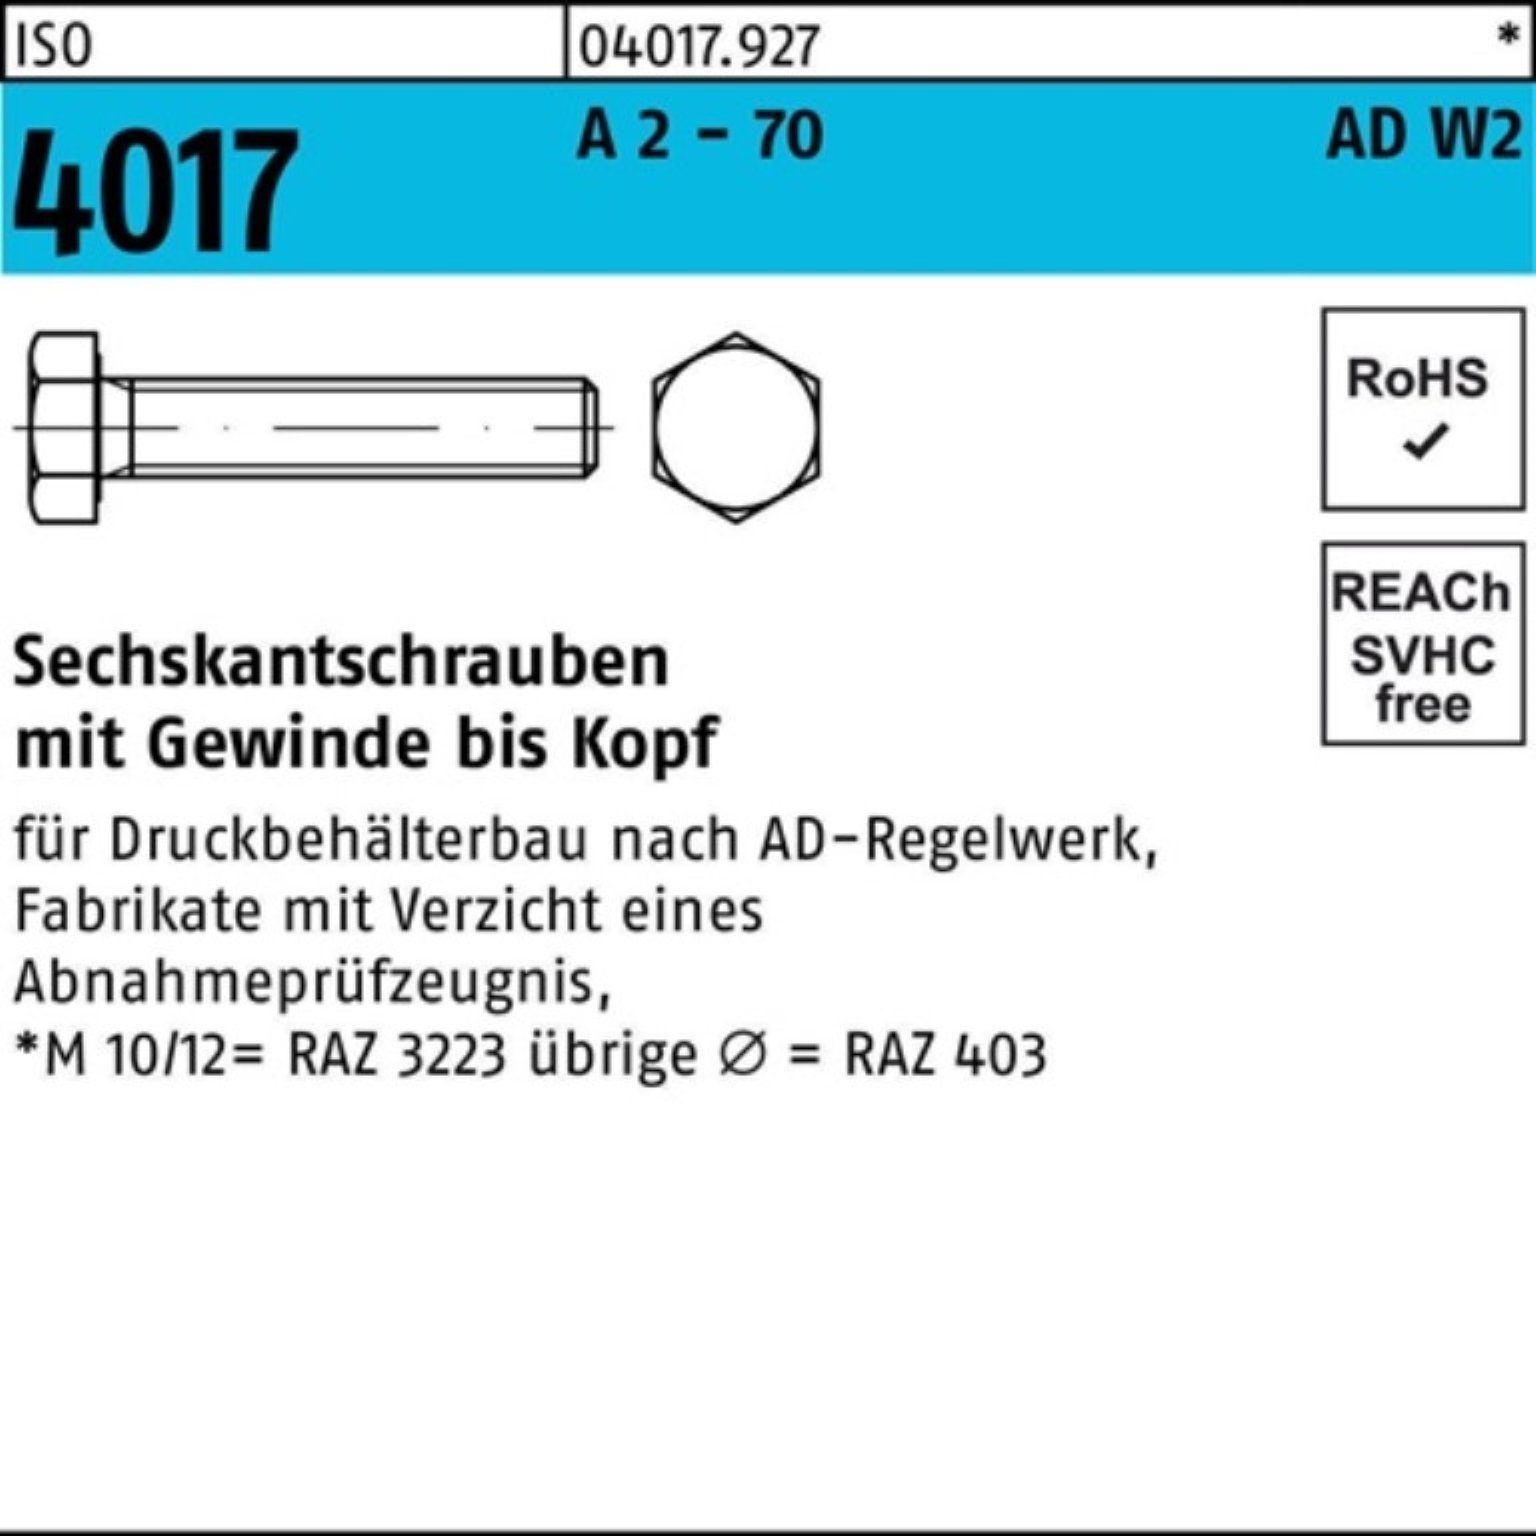 Bufab Sechskantschraube 100er M10x 2 ISO Sechskantschraube A 70 100 - AD-W2 VG 50 St 4017 Pack